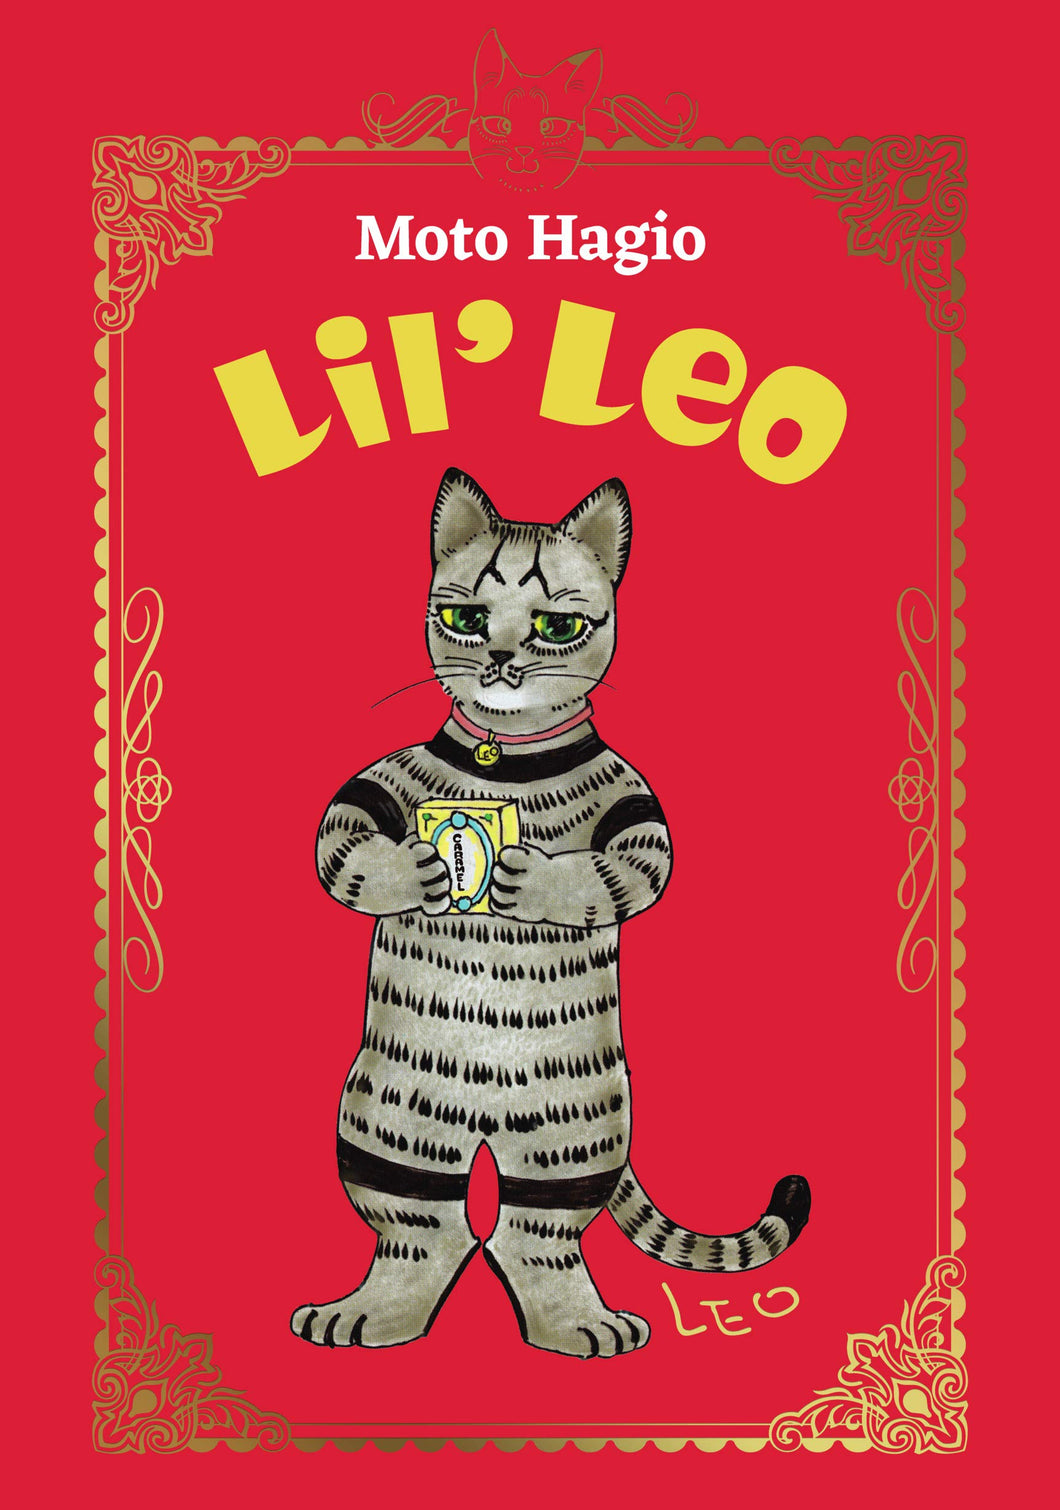 Lil' Leo by Moto Hagio